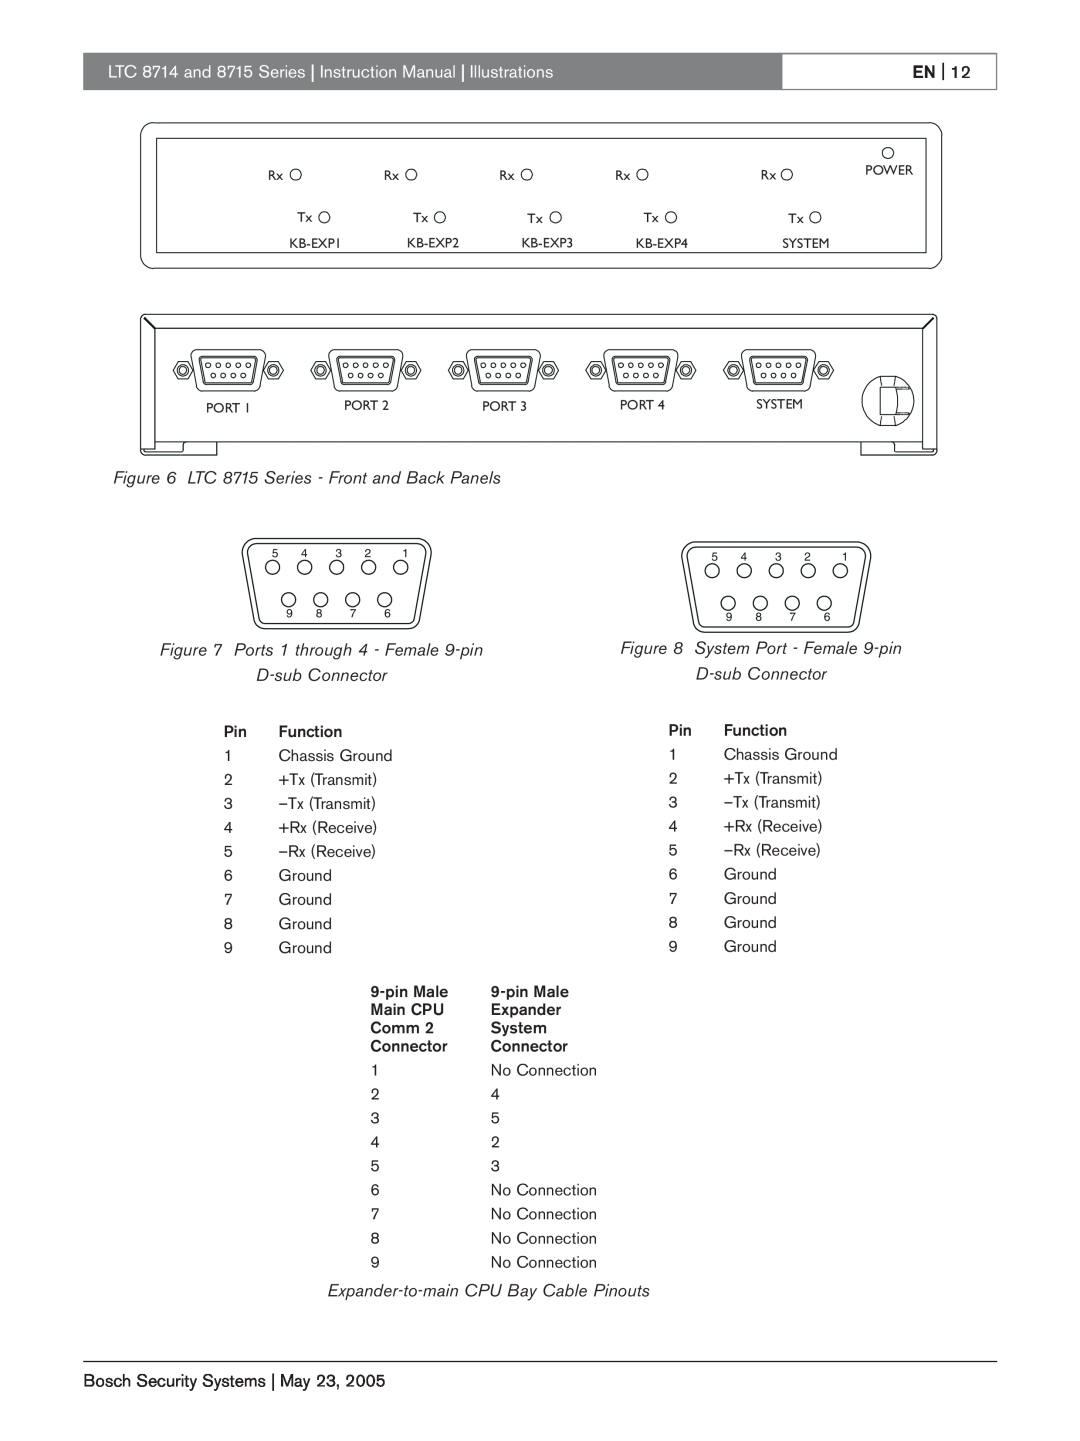 Bosch Appliances LTC 8715 Series - Front and Back Panels, Ports 1 through 4 - Female 9-pin, En, D-subConnector 